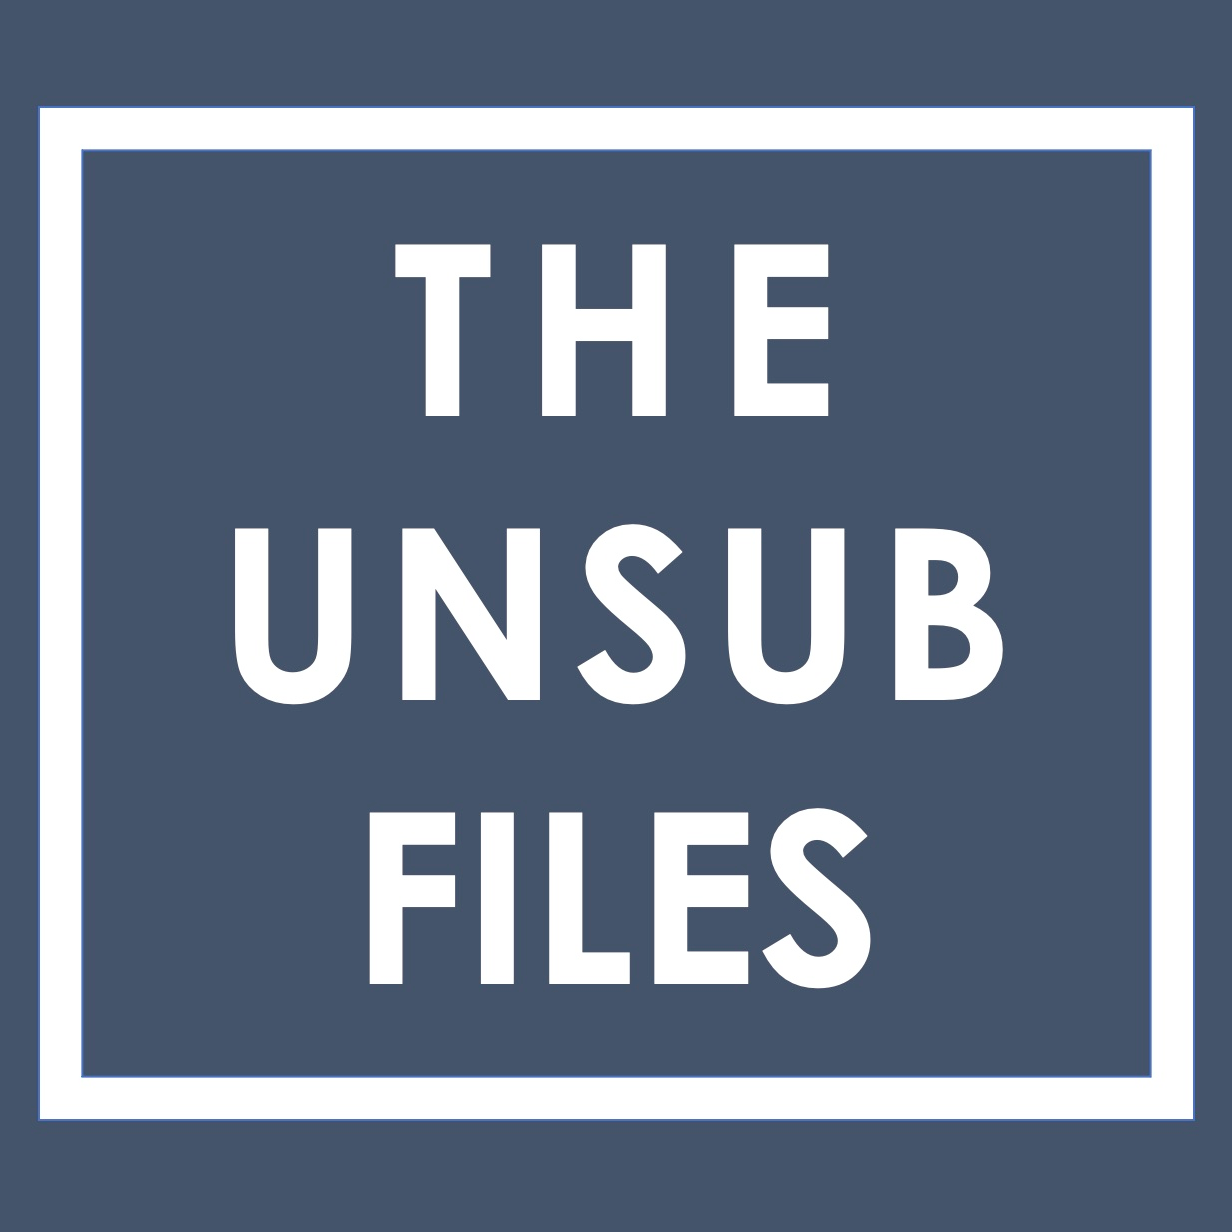 Artwork for The UNSUB files